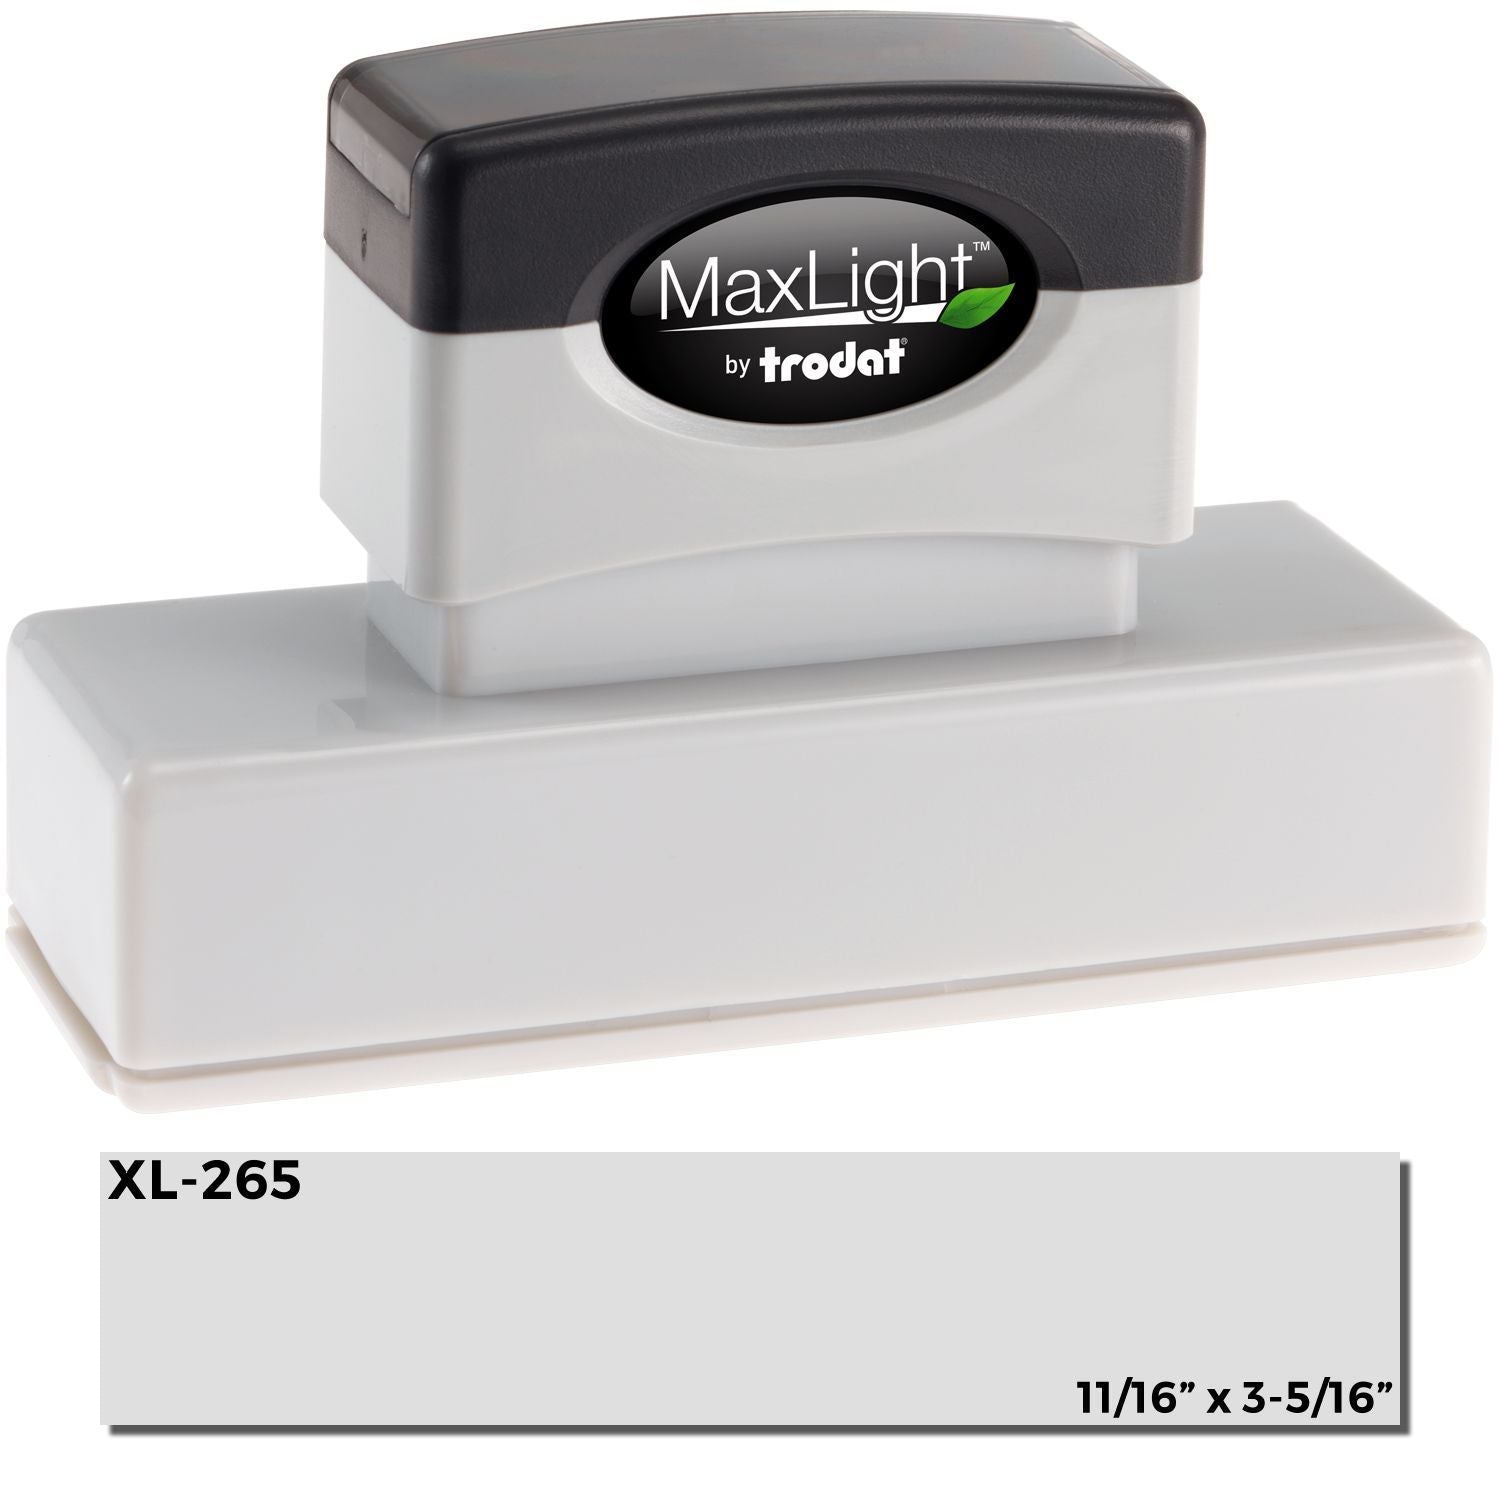 Maxlight Xl2 265 Pre Inked Stamp 11 16 X 3 5 16 Main Image